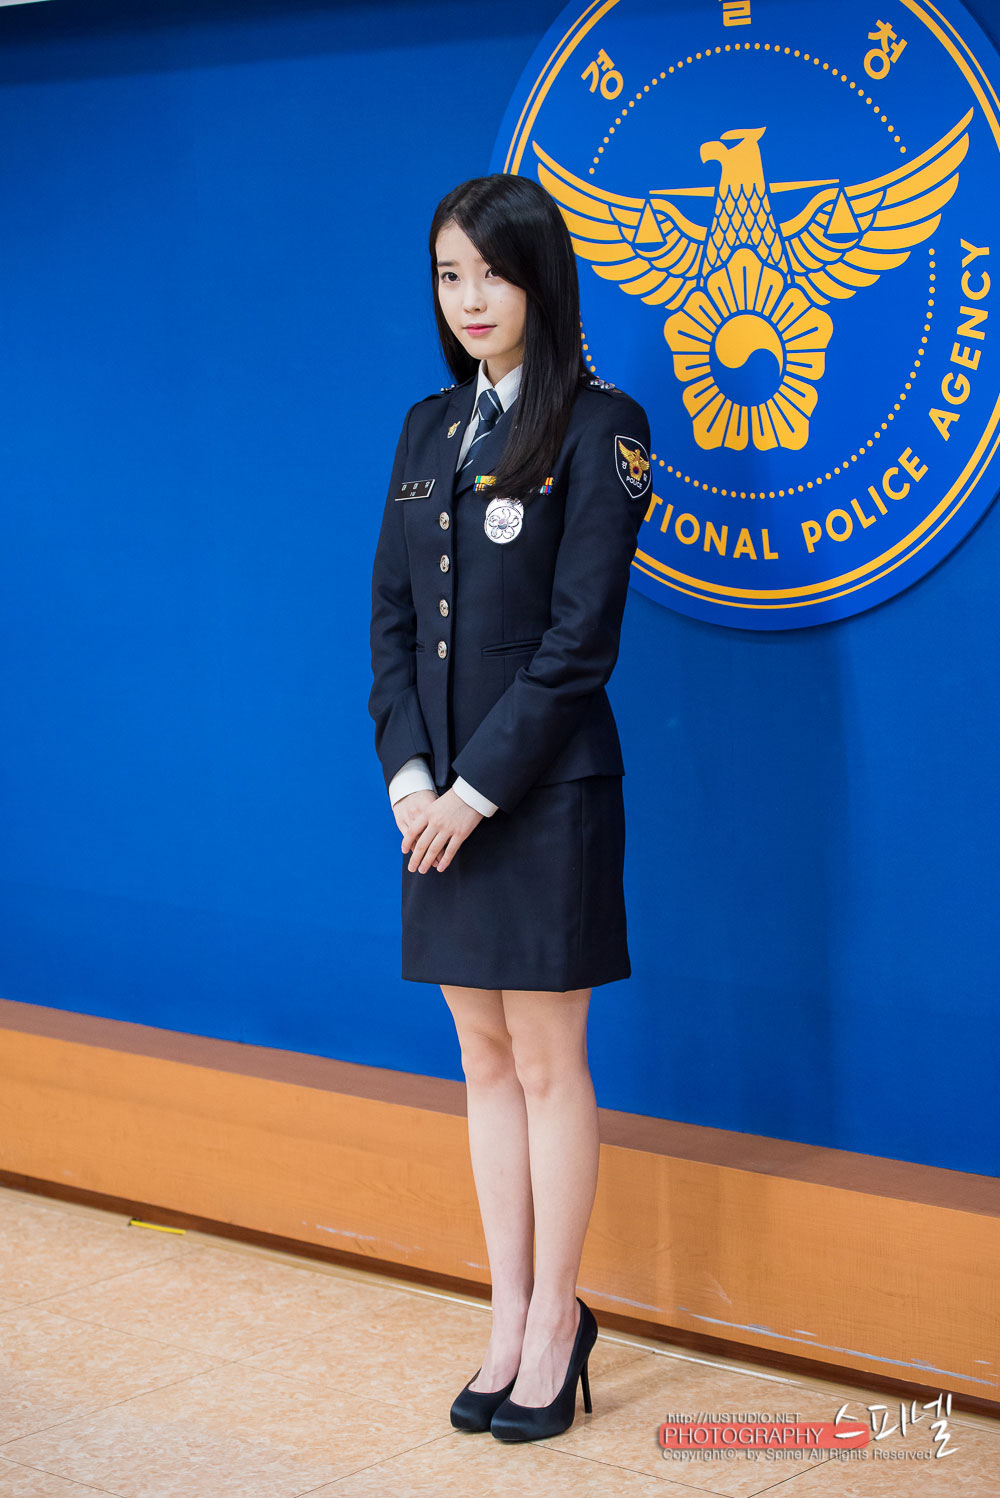 IU senior honorary police officer 2014